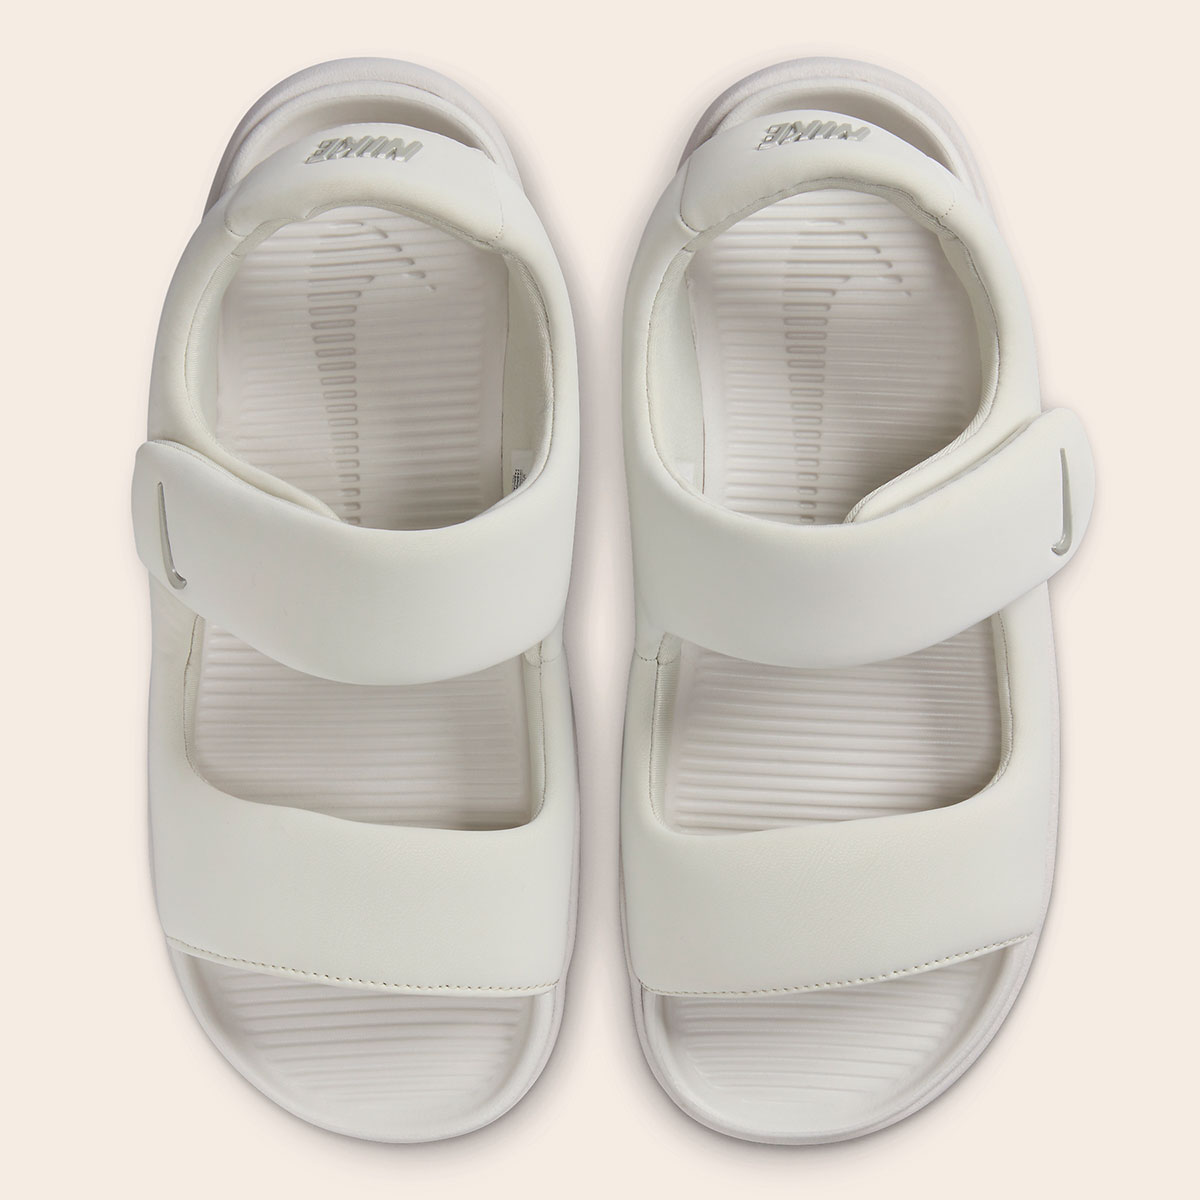 Nike Calm Sandal Release Date 6